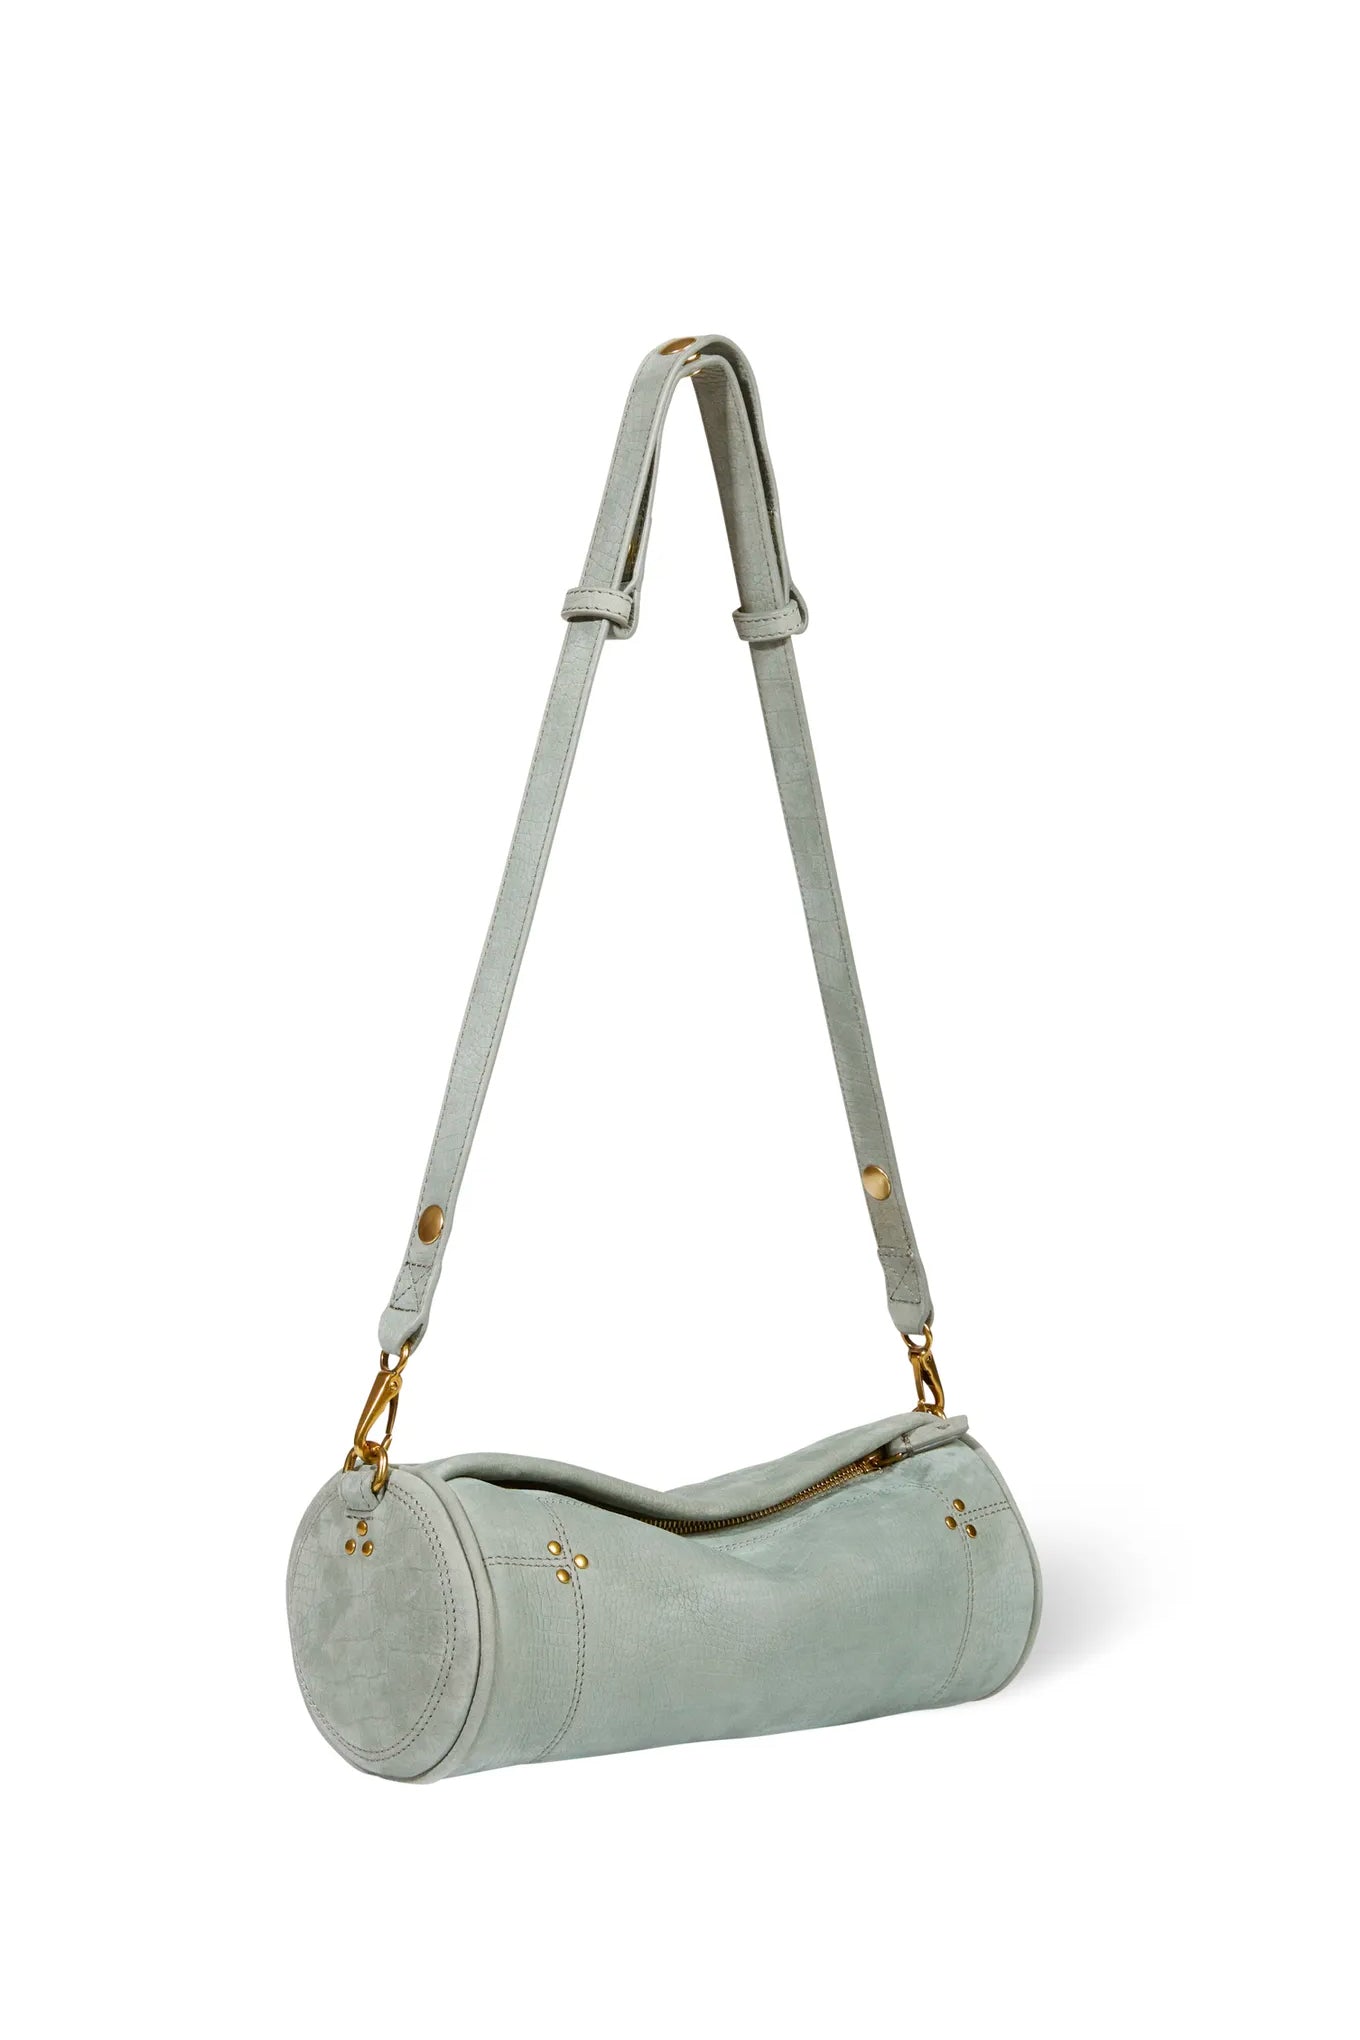 Shoulder Bag Handbag Purse Strap Crossbody Strap Adjustable Canvas Strap 35  to 52 Inch W/Hooks